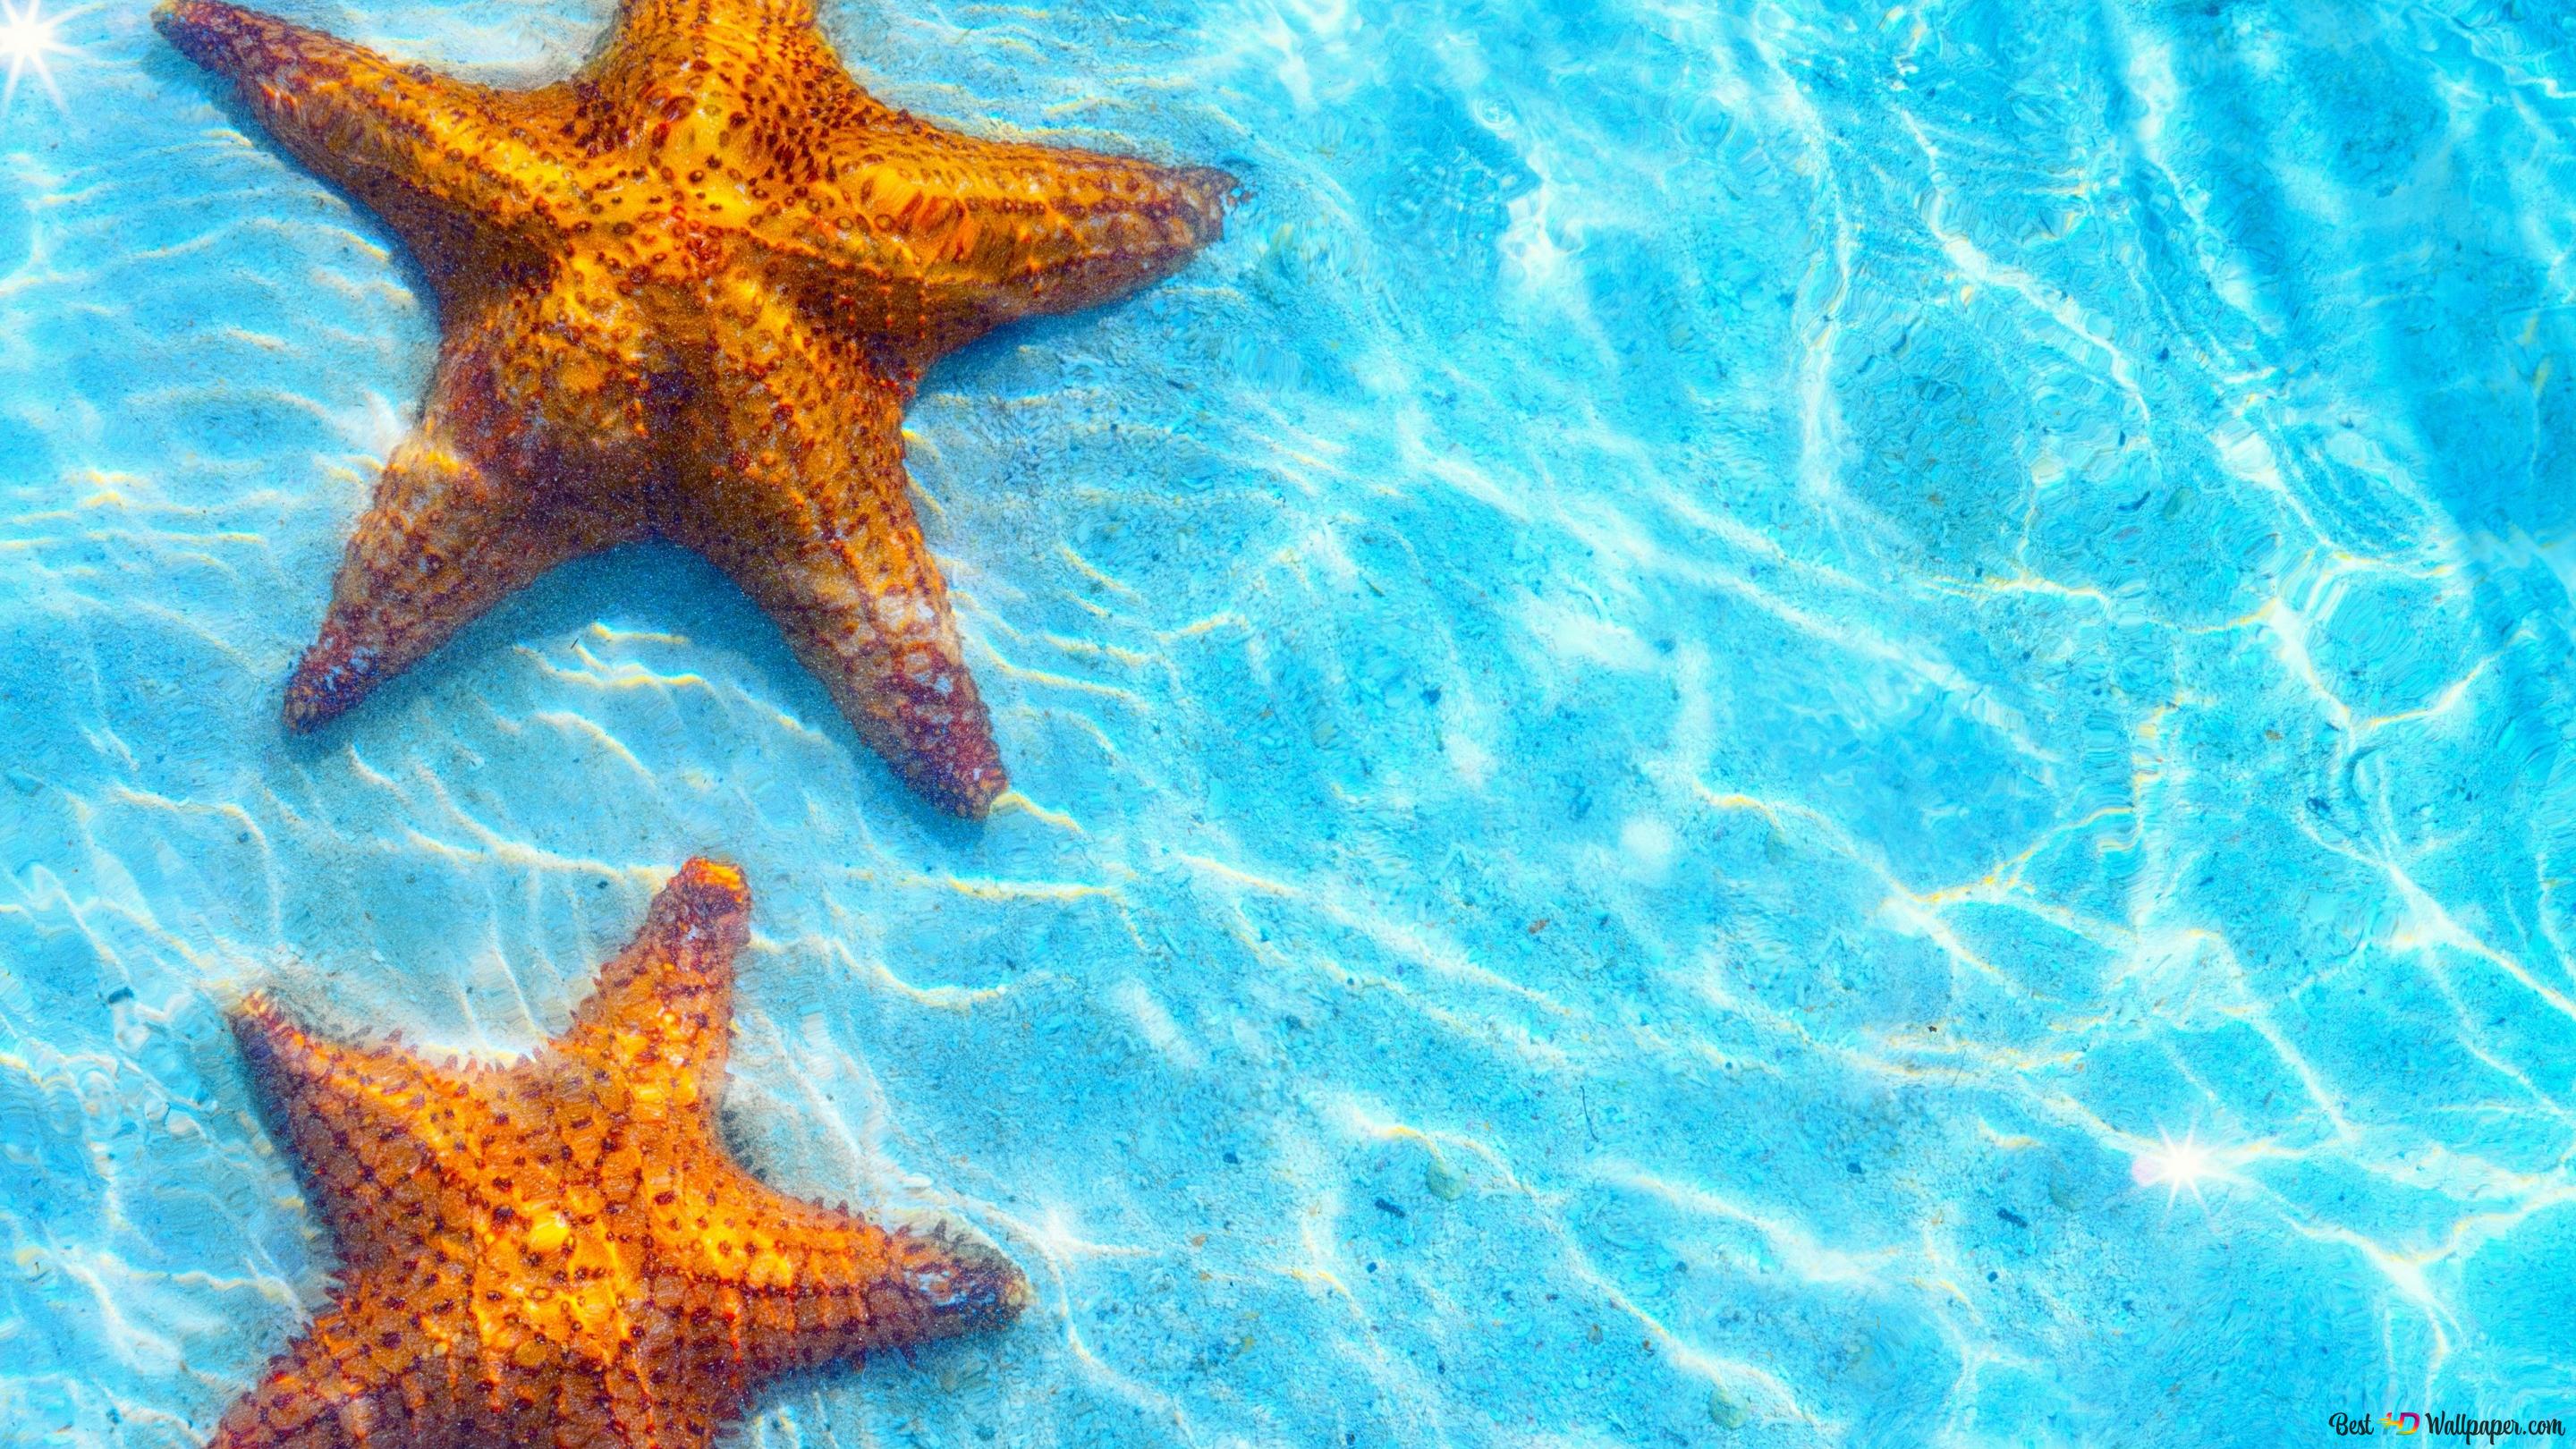 Star fish in the water 2K wallpaper download